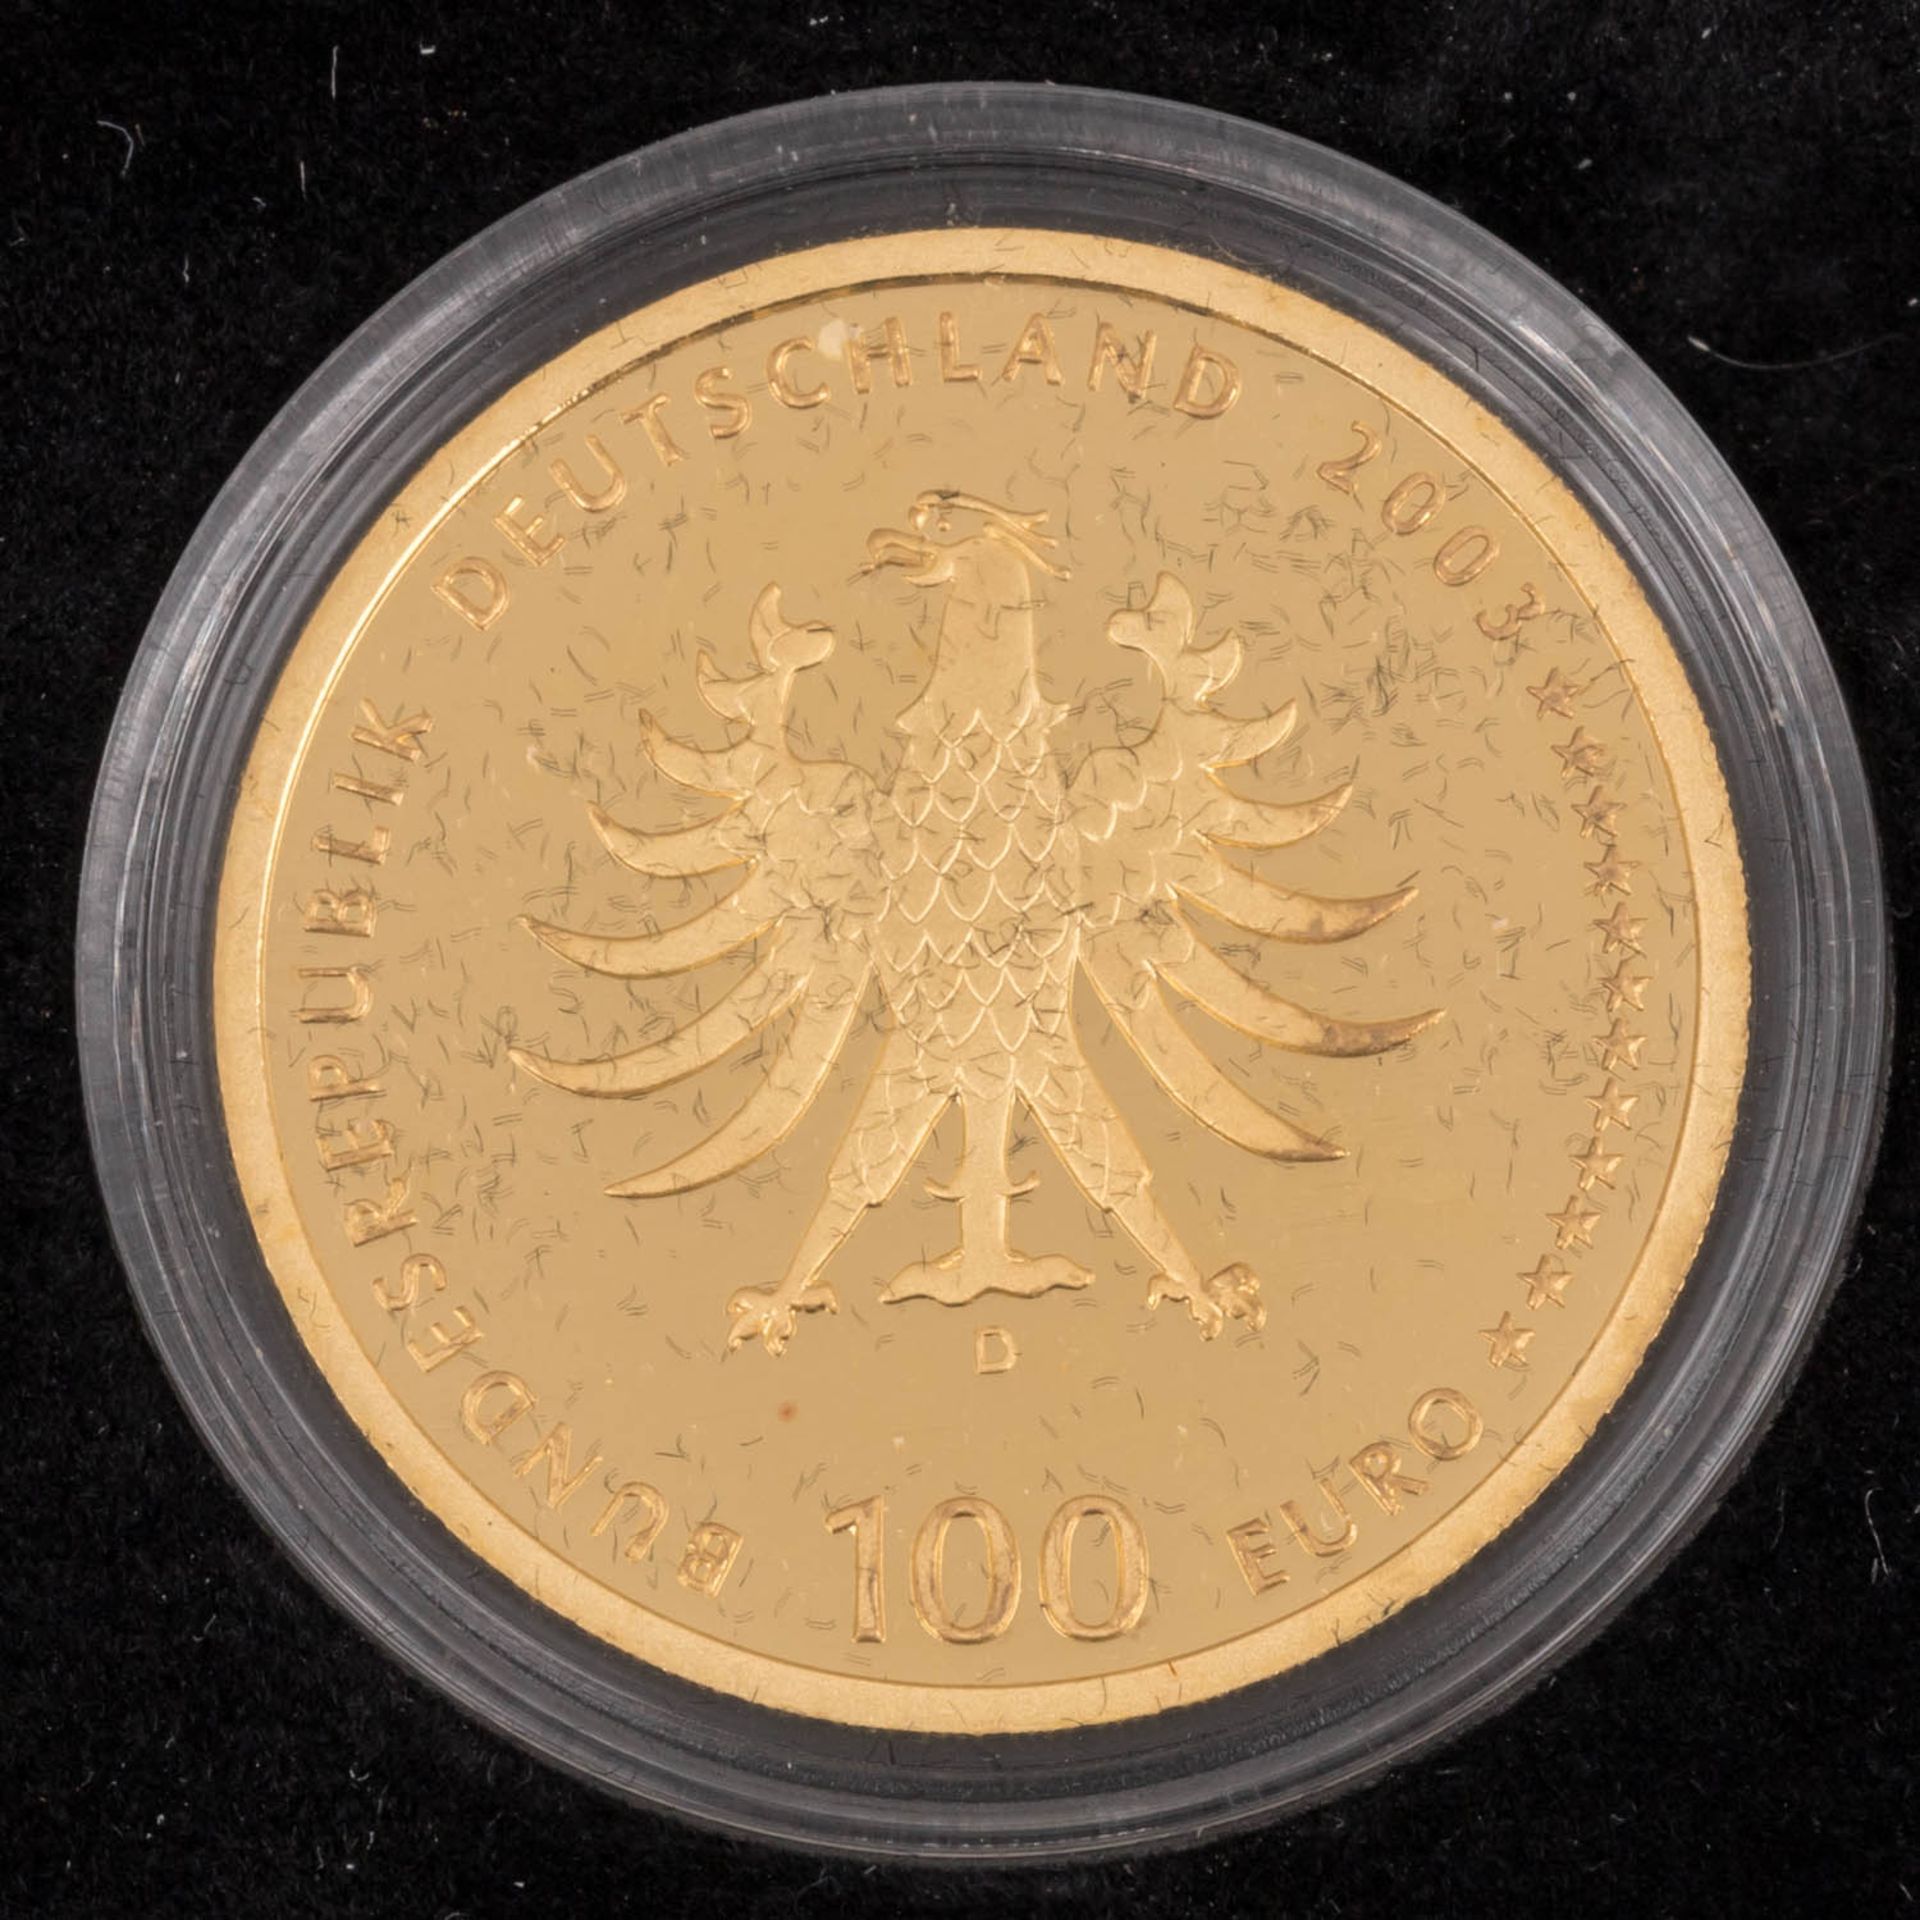 BRD/GOLD - 100 Euro 2003/D - Image 3 of 3